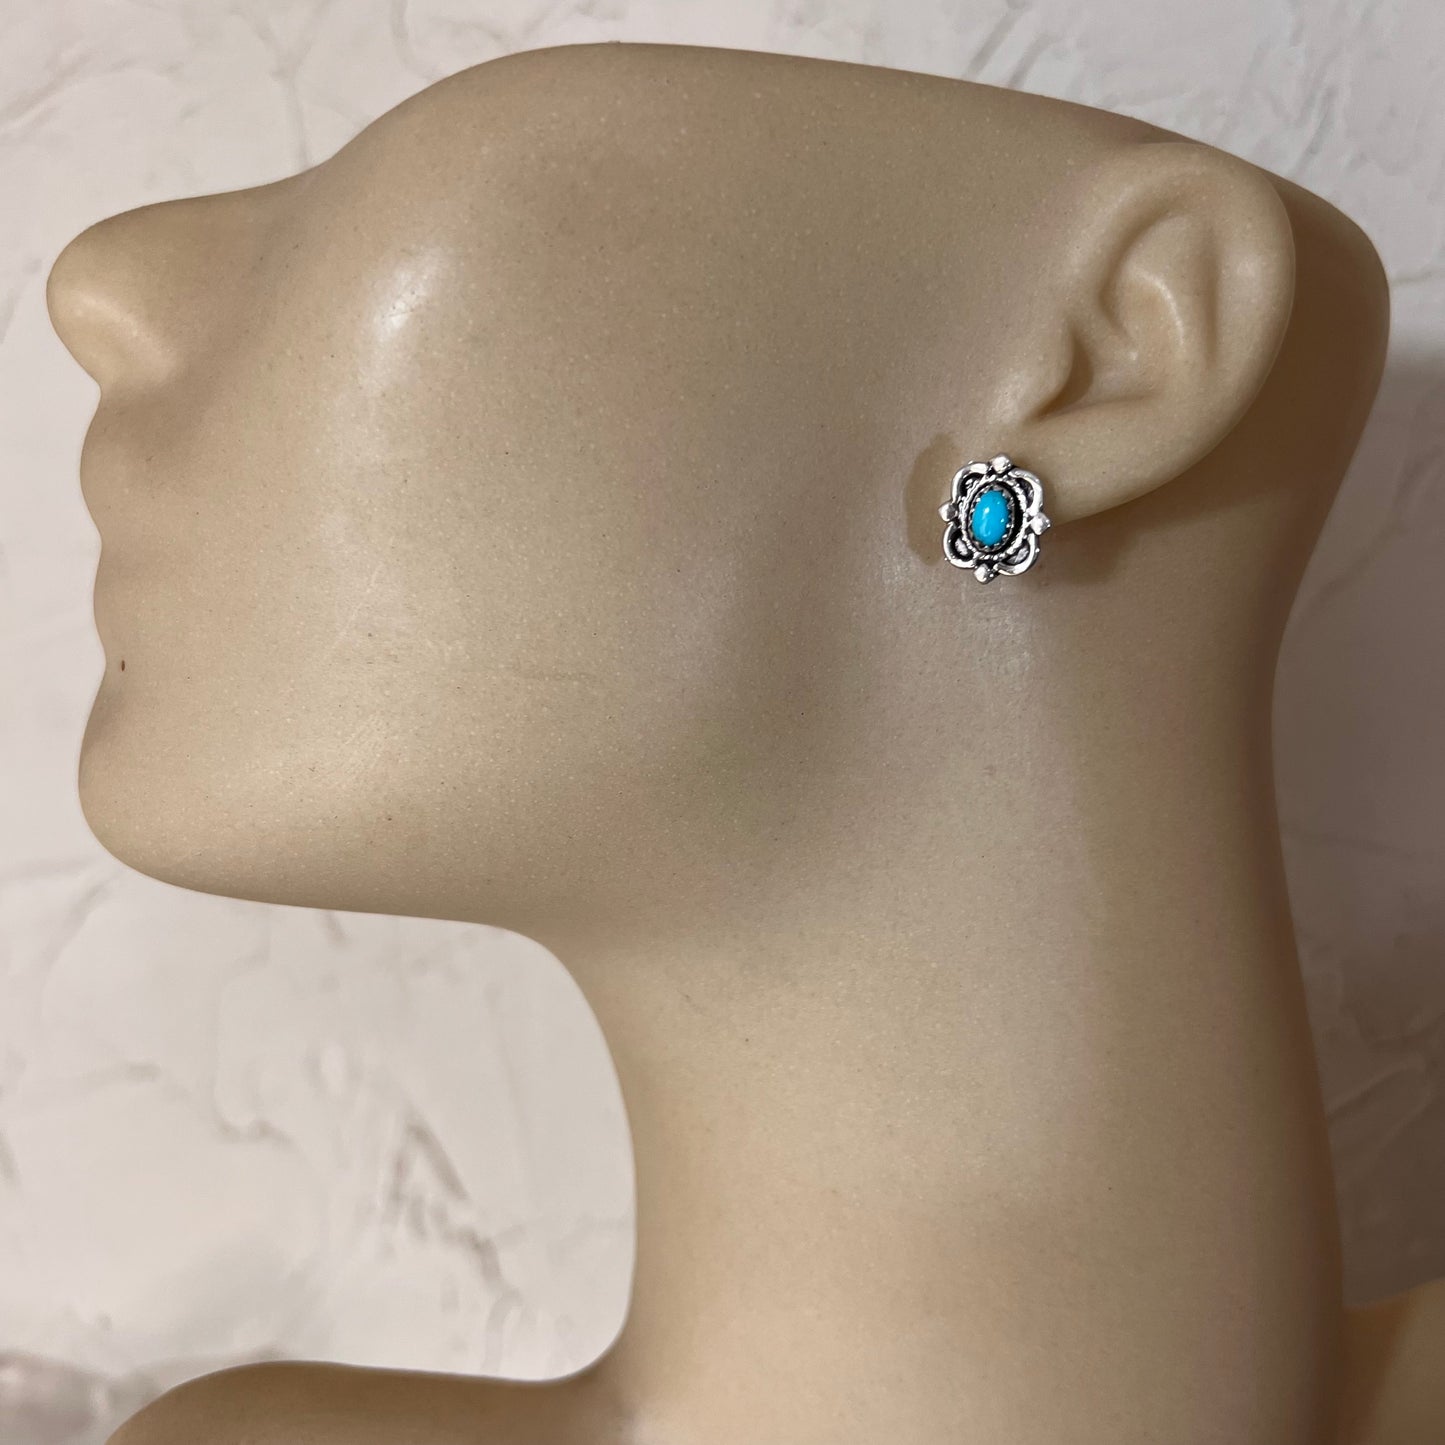 Small turquoise stud earrings, sterling silver Navajo handmade, Sleeping Beauty, Paige Gordon